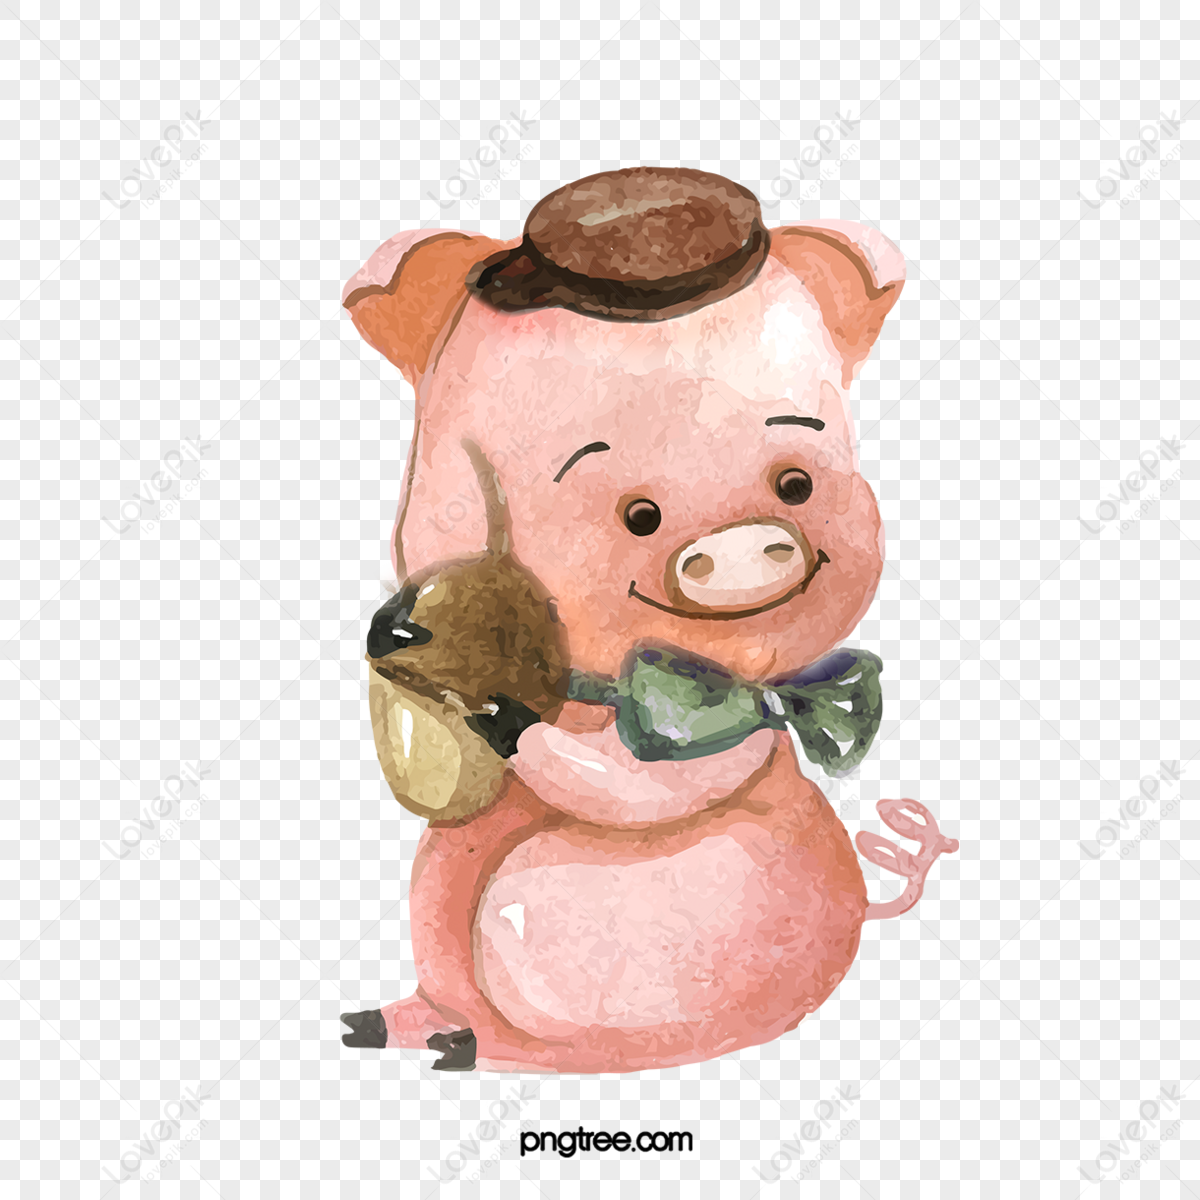 Piglet watercolor cute cartoon animal element,blanket,sweets png image free download